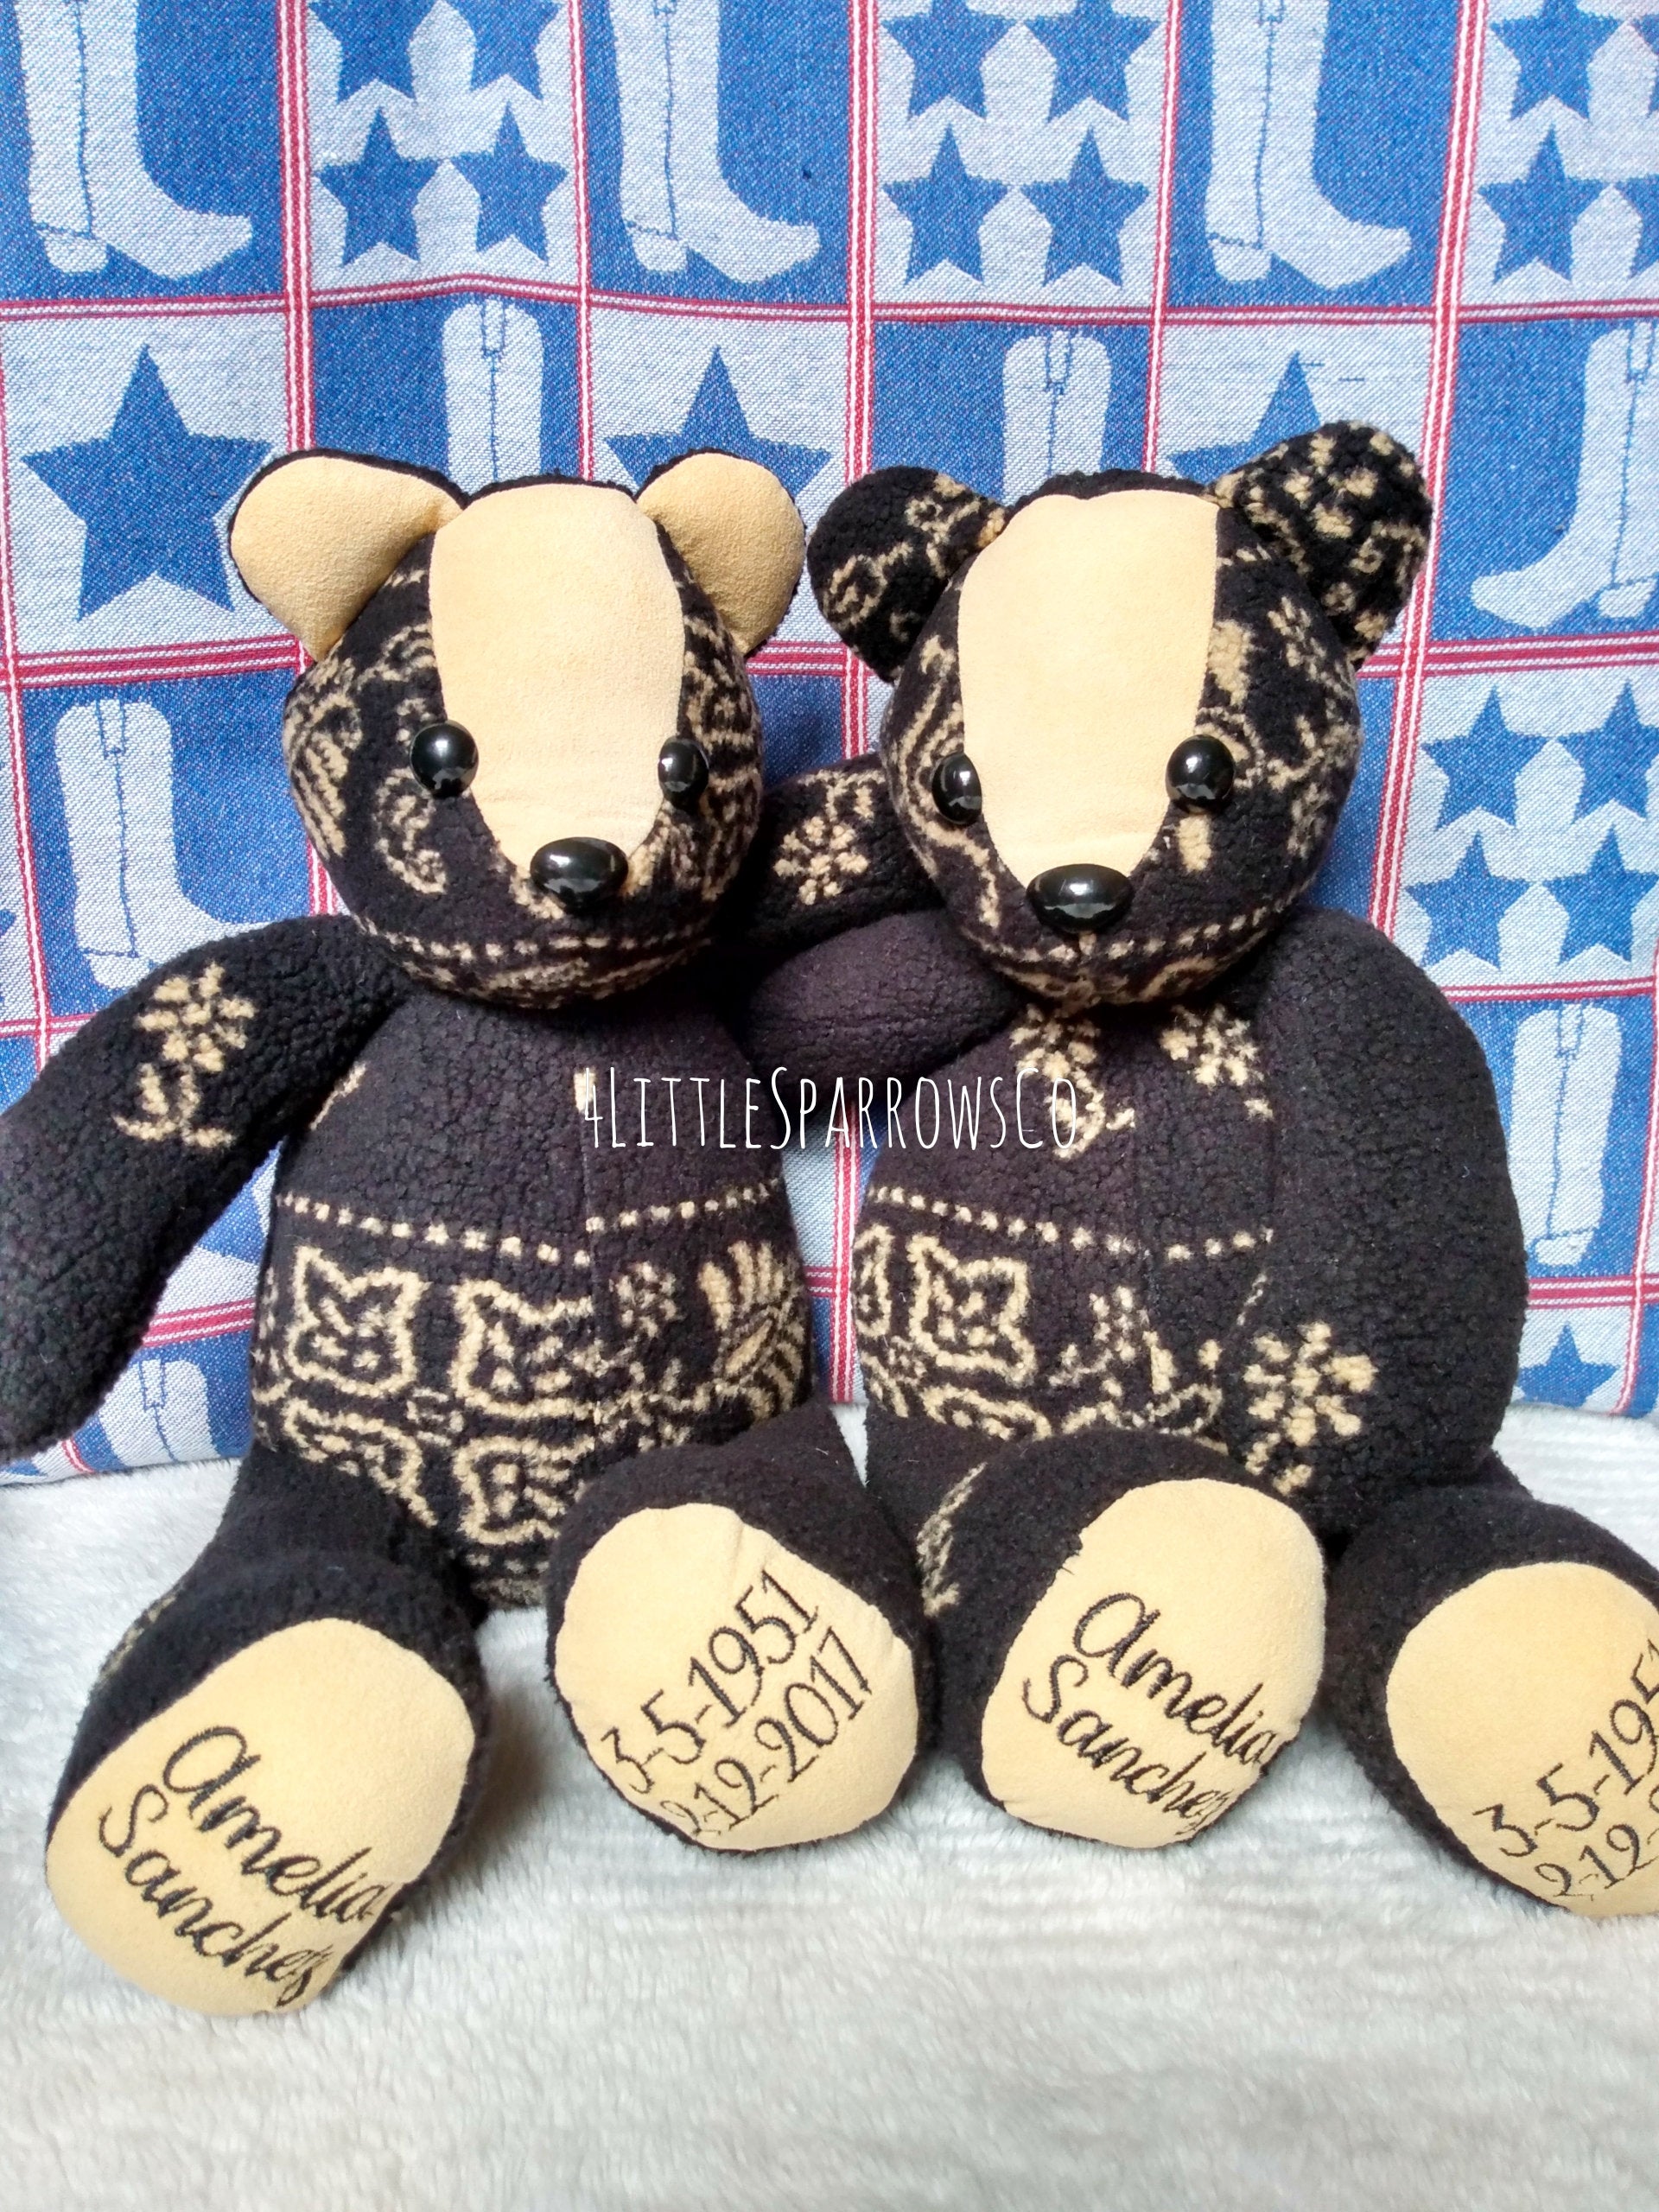 Handmade Memory Bear Made With Loved Ones Clothing Keepsake Teddybear  Memorial